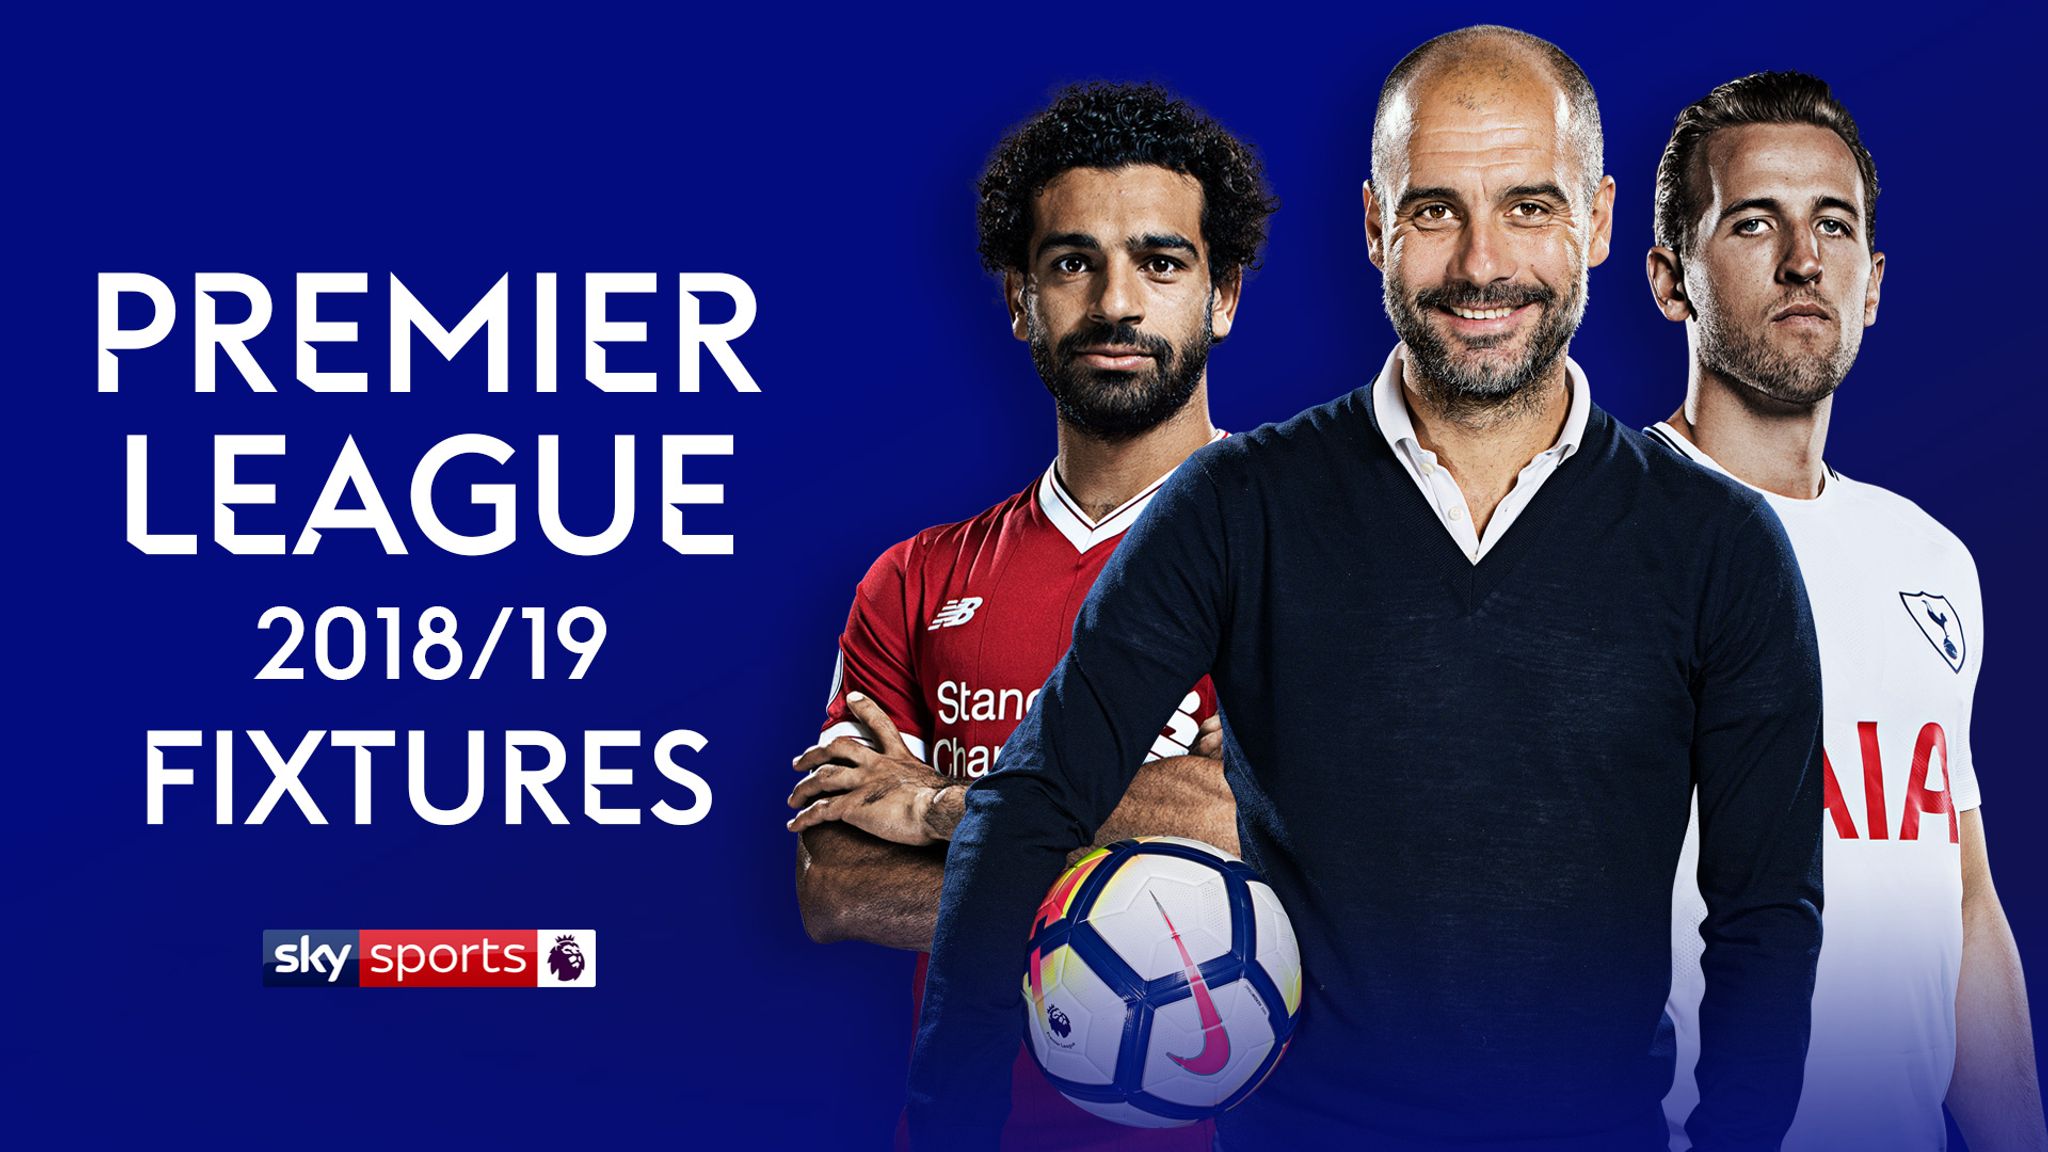 Premier League fixtures 2018/19: host Manchester on opening | Football News | Sky